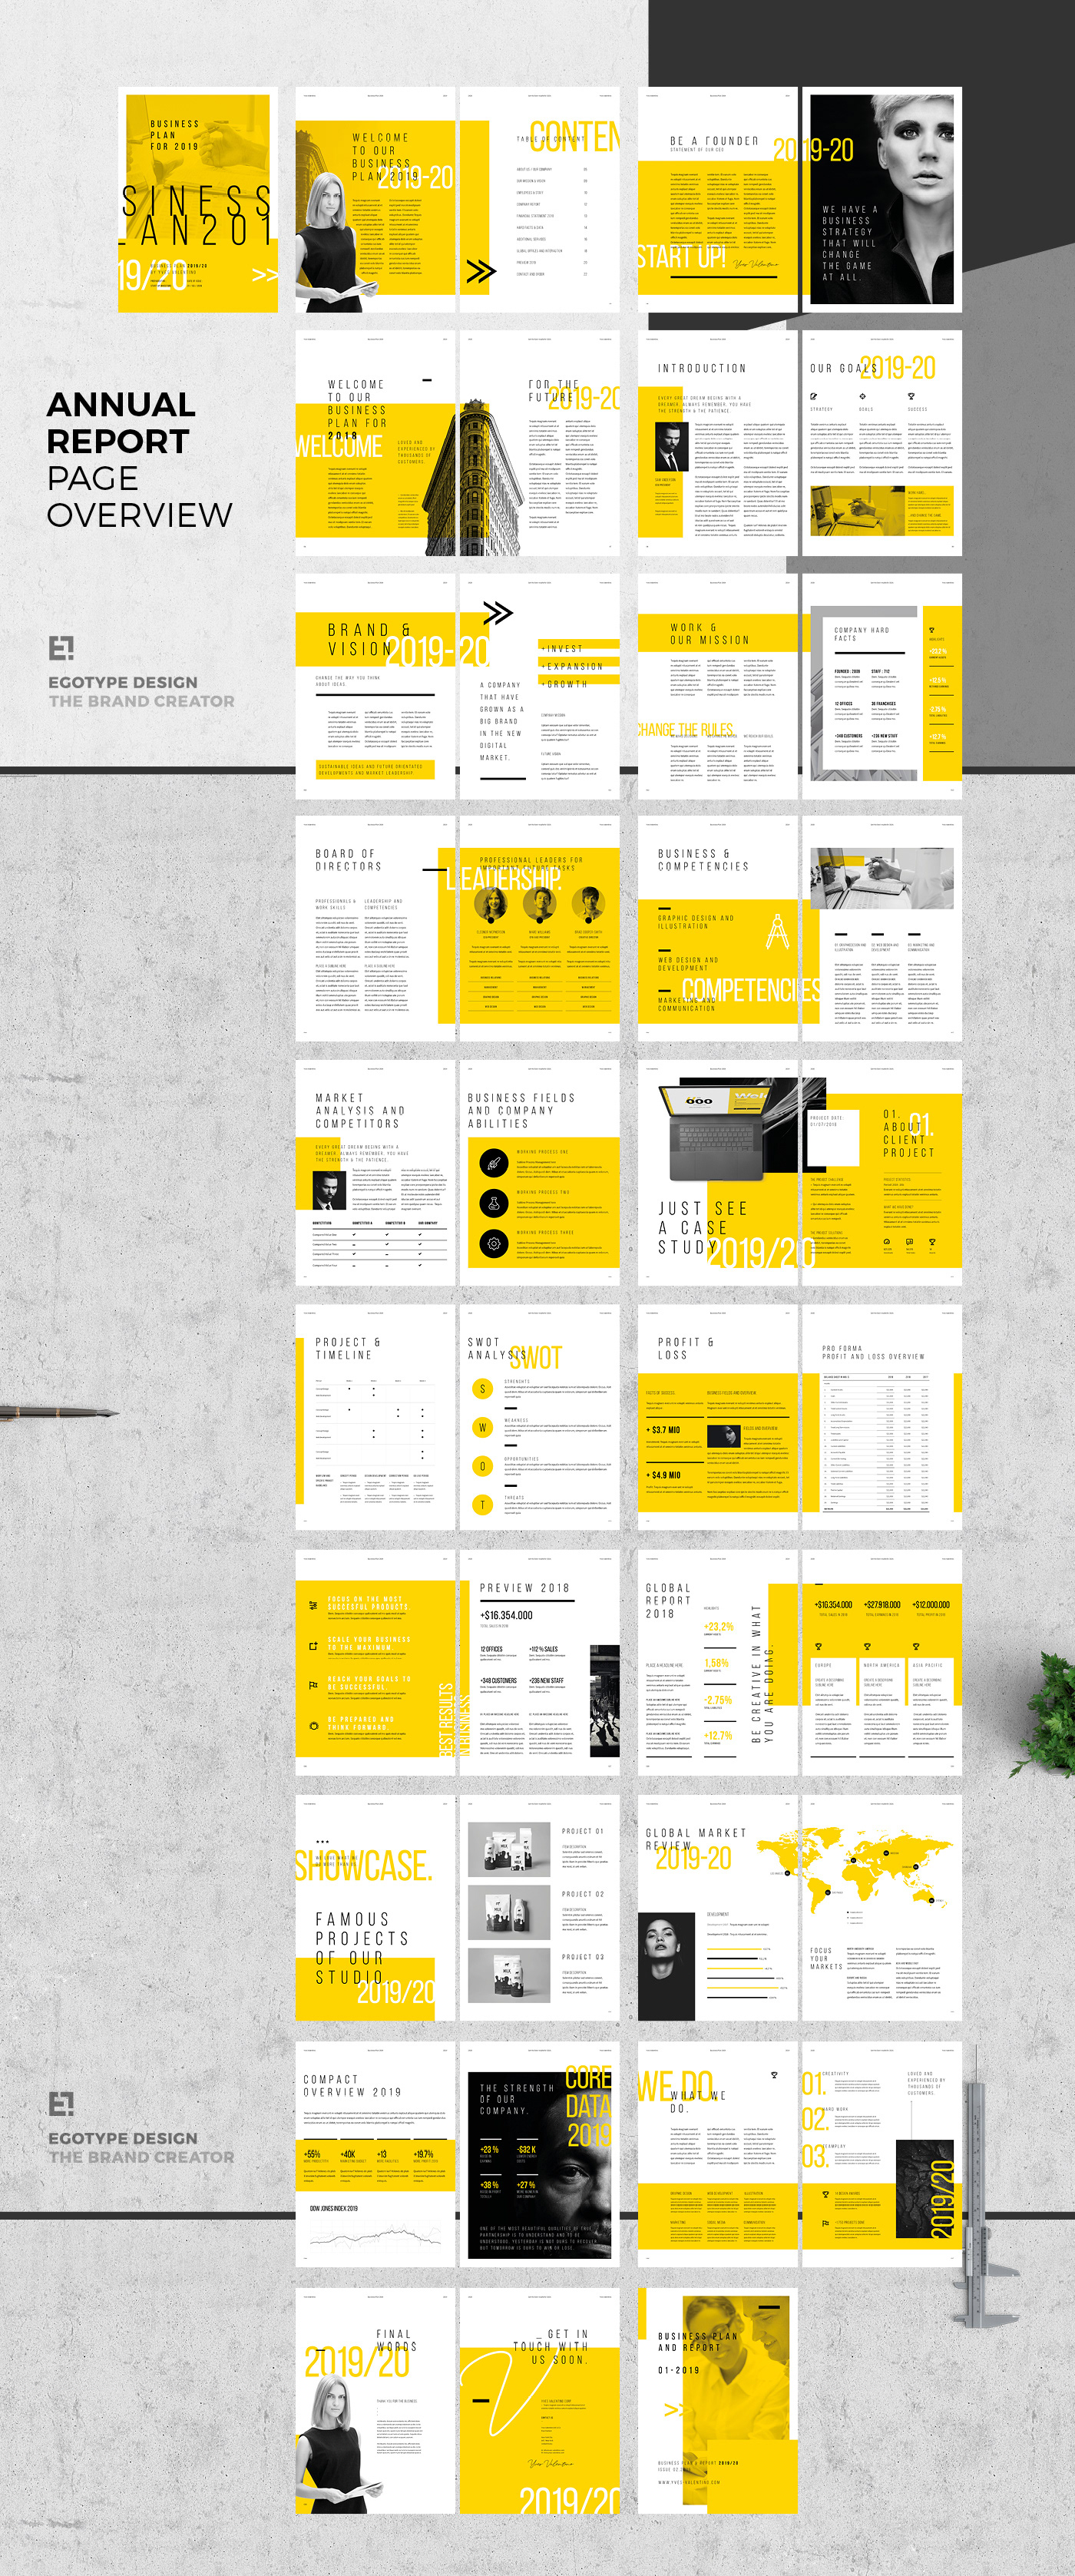 brand manual Proposal ANNUAL report profile portfolio Stationery social media Corporate Design